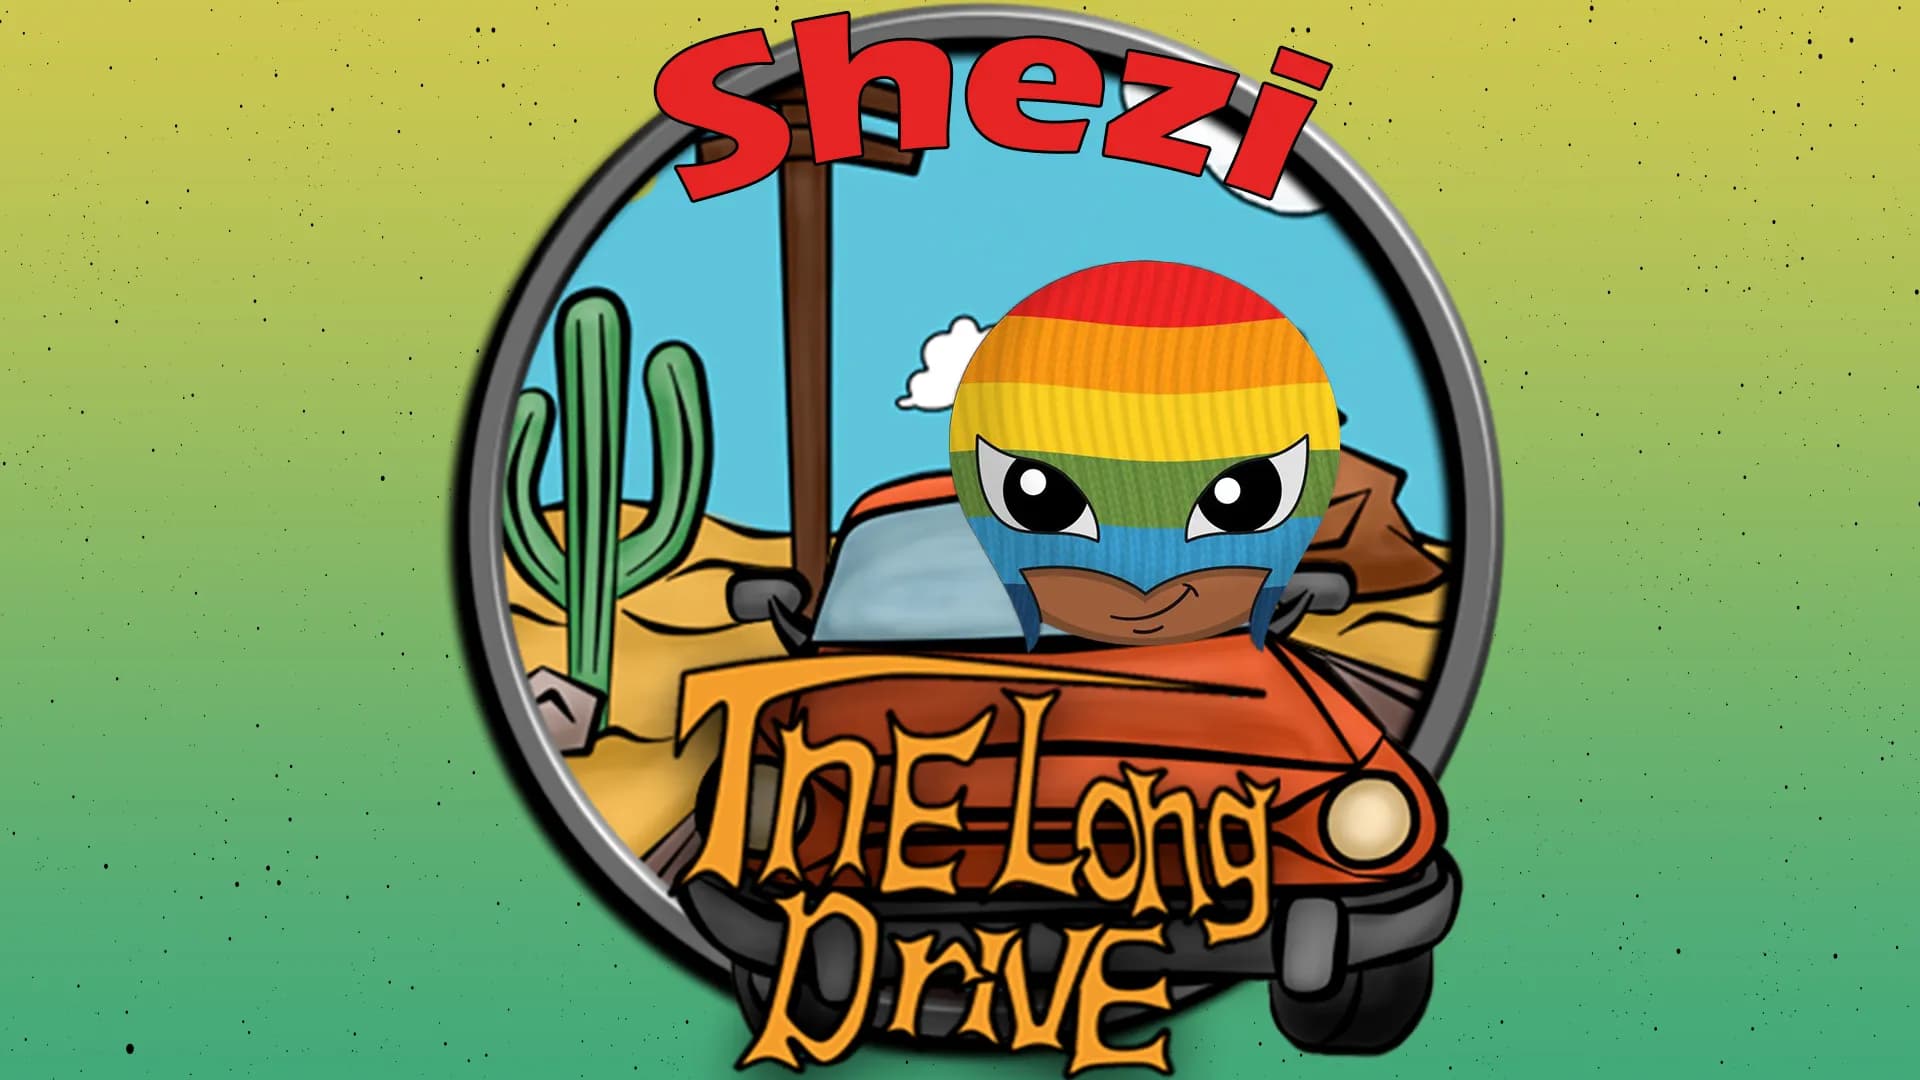 Long Drive / Shezi